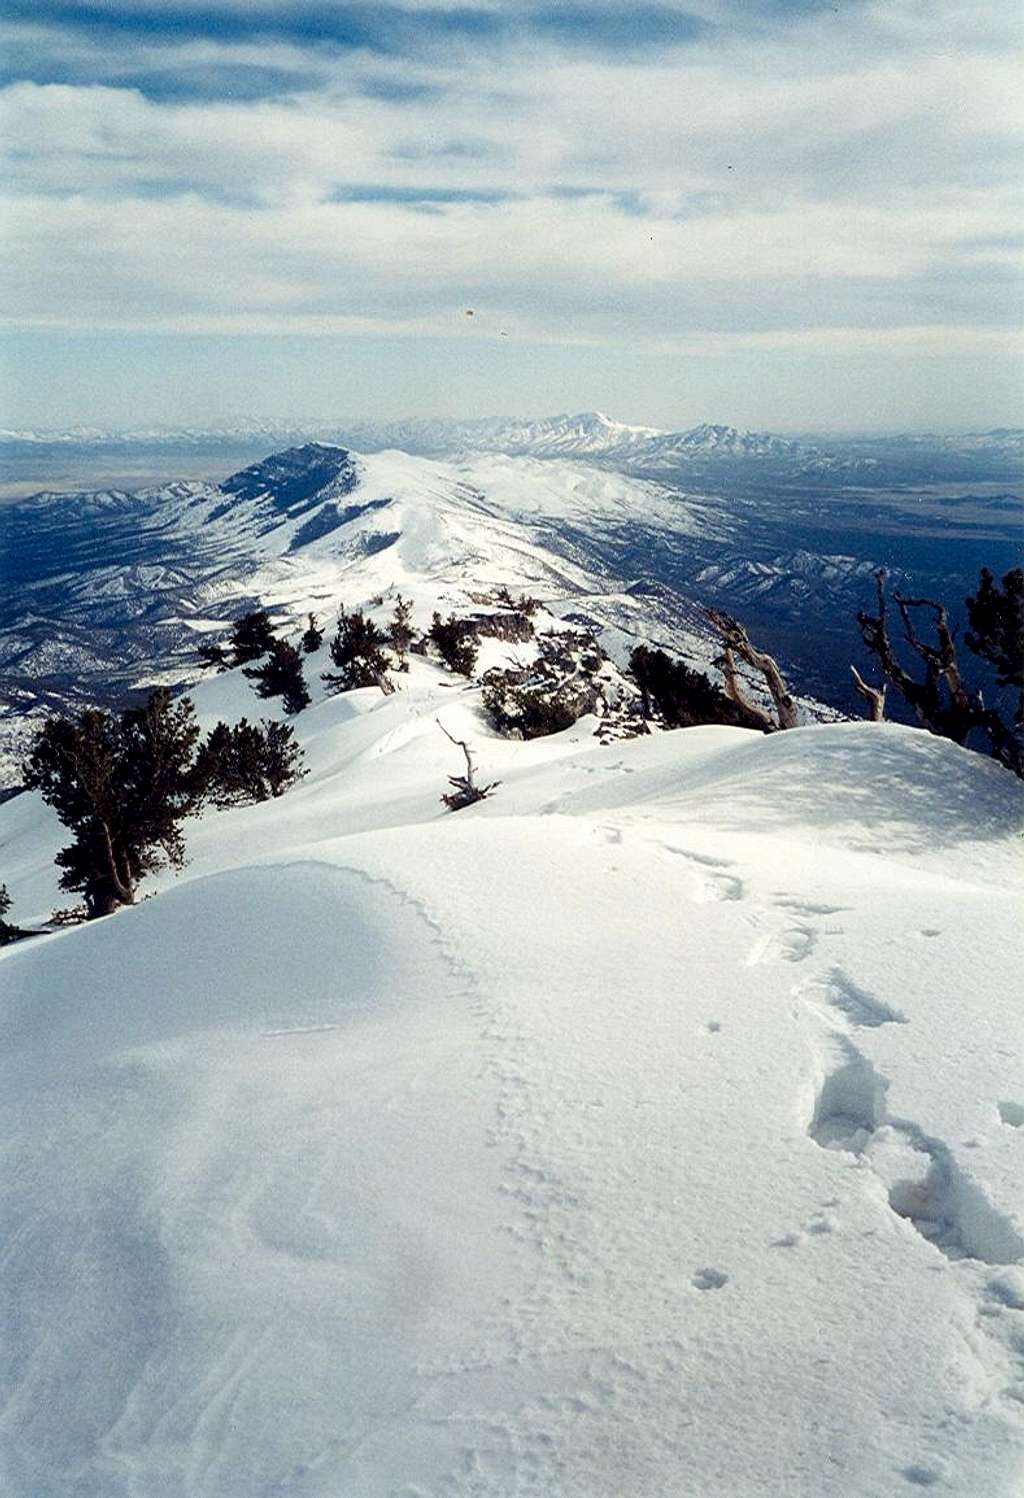 Vickory Peak views